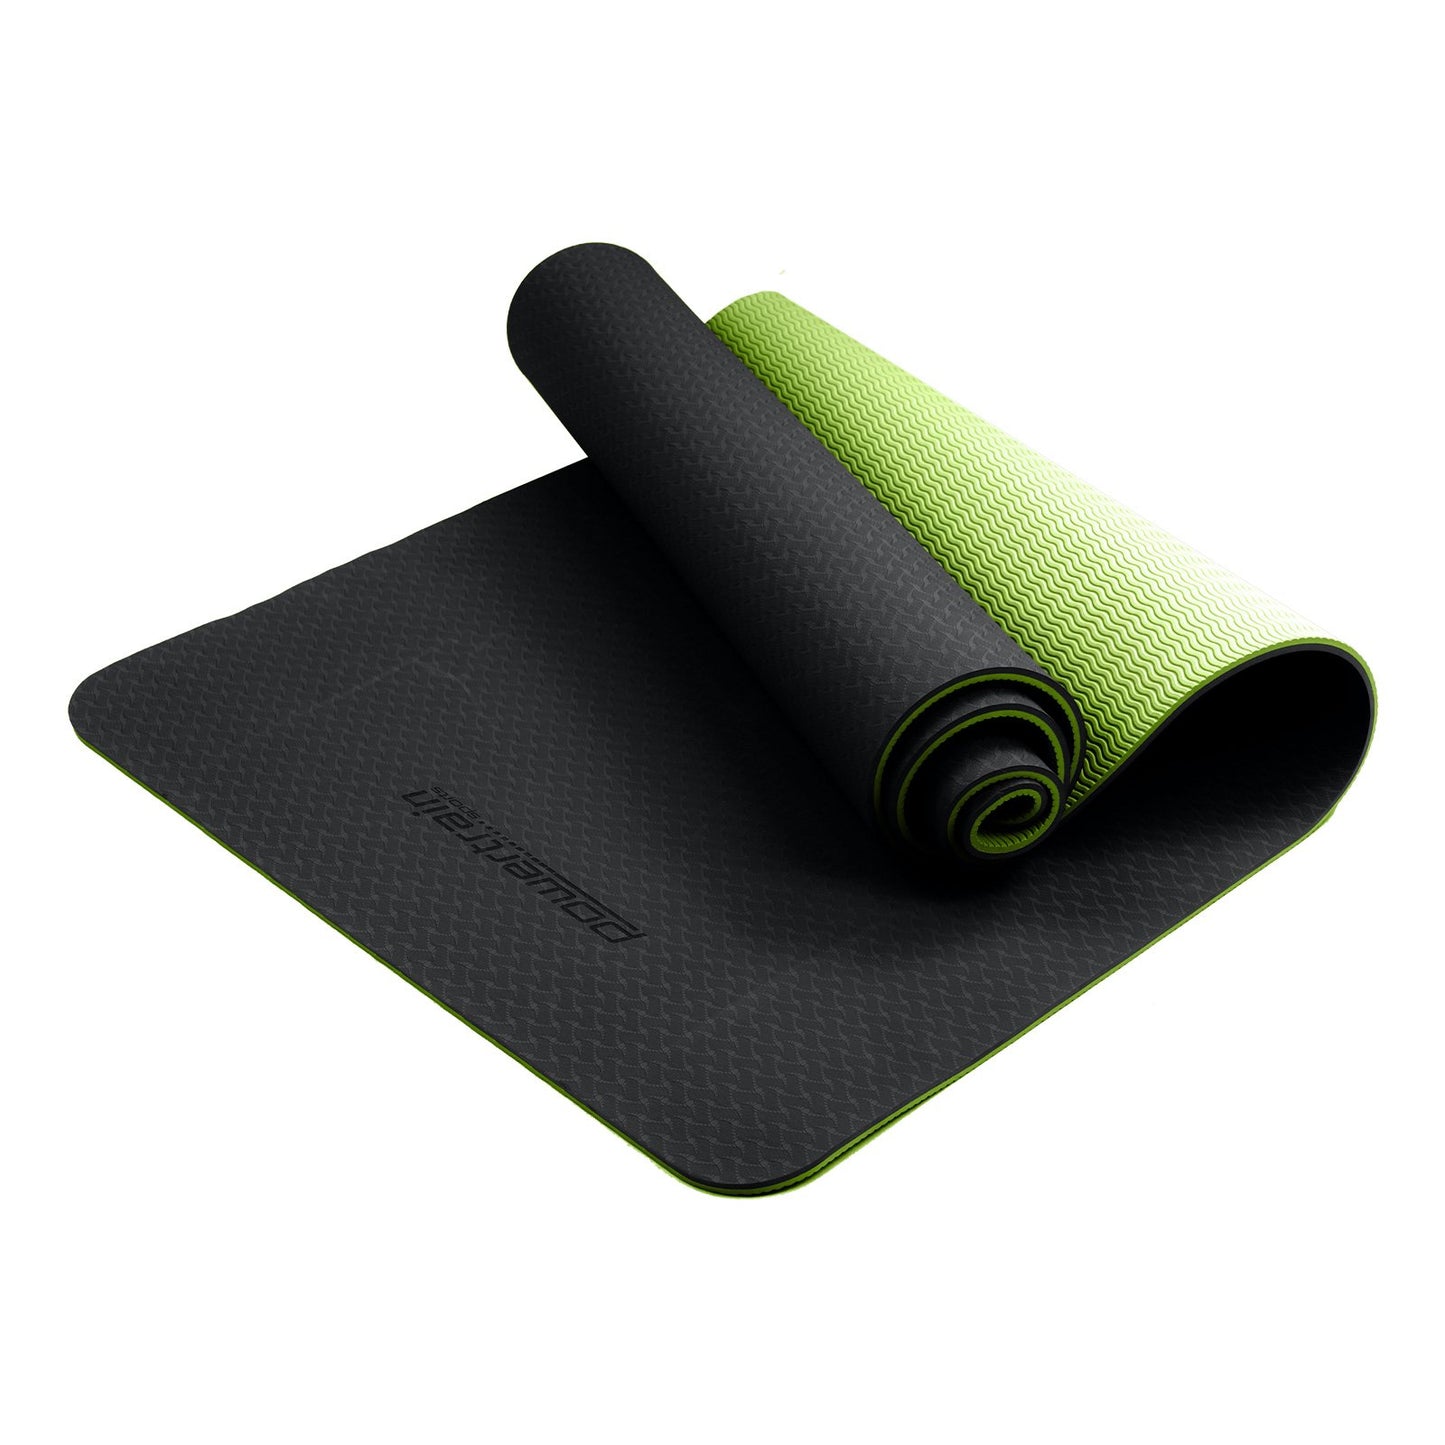 Powertrain Eco-Friendly TPE Pilates Exercise Yoga Mat 8mm  Black Green